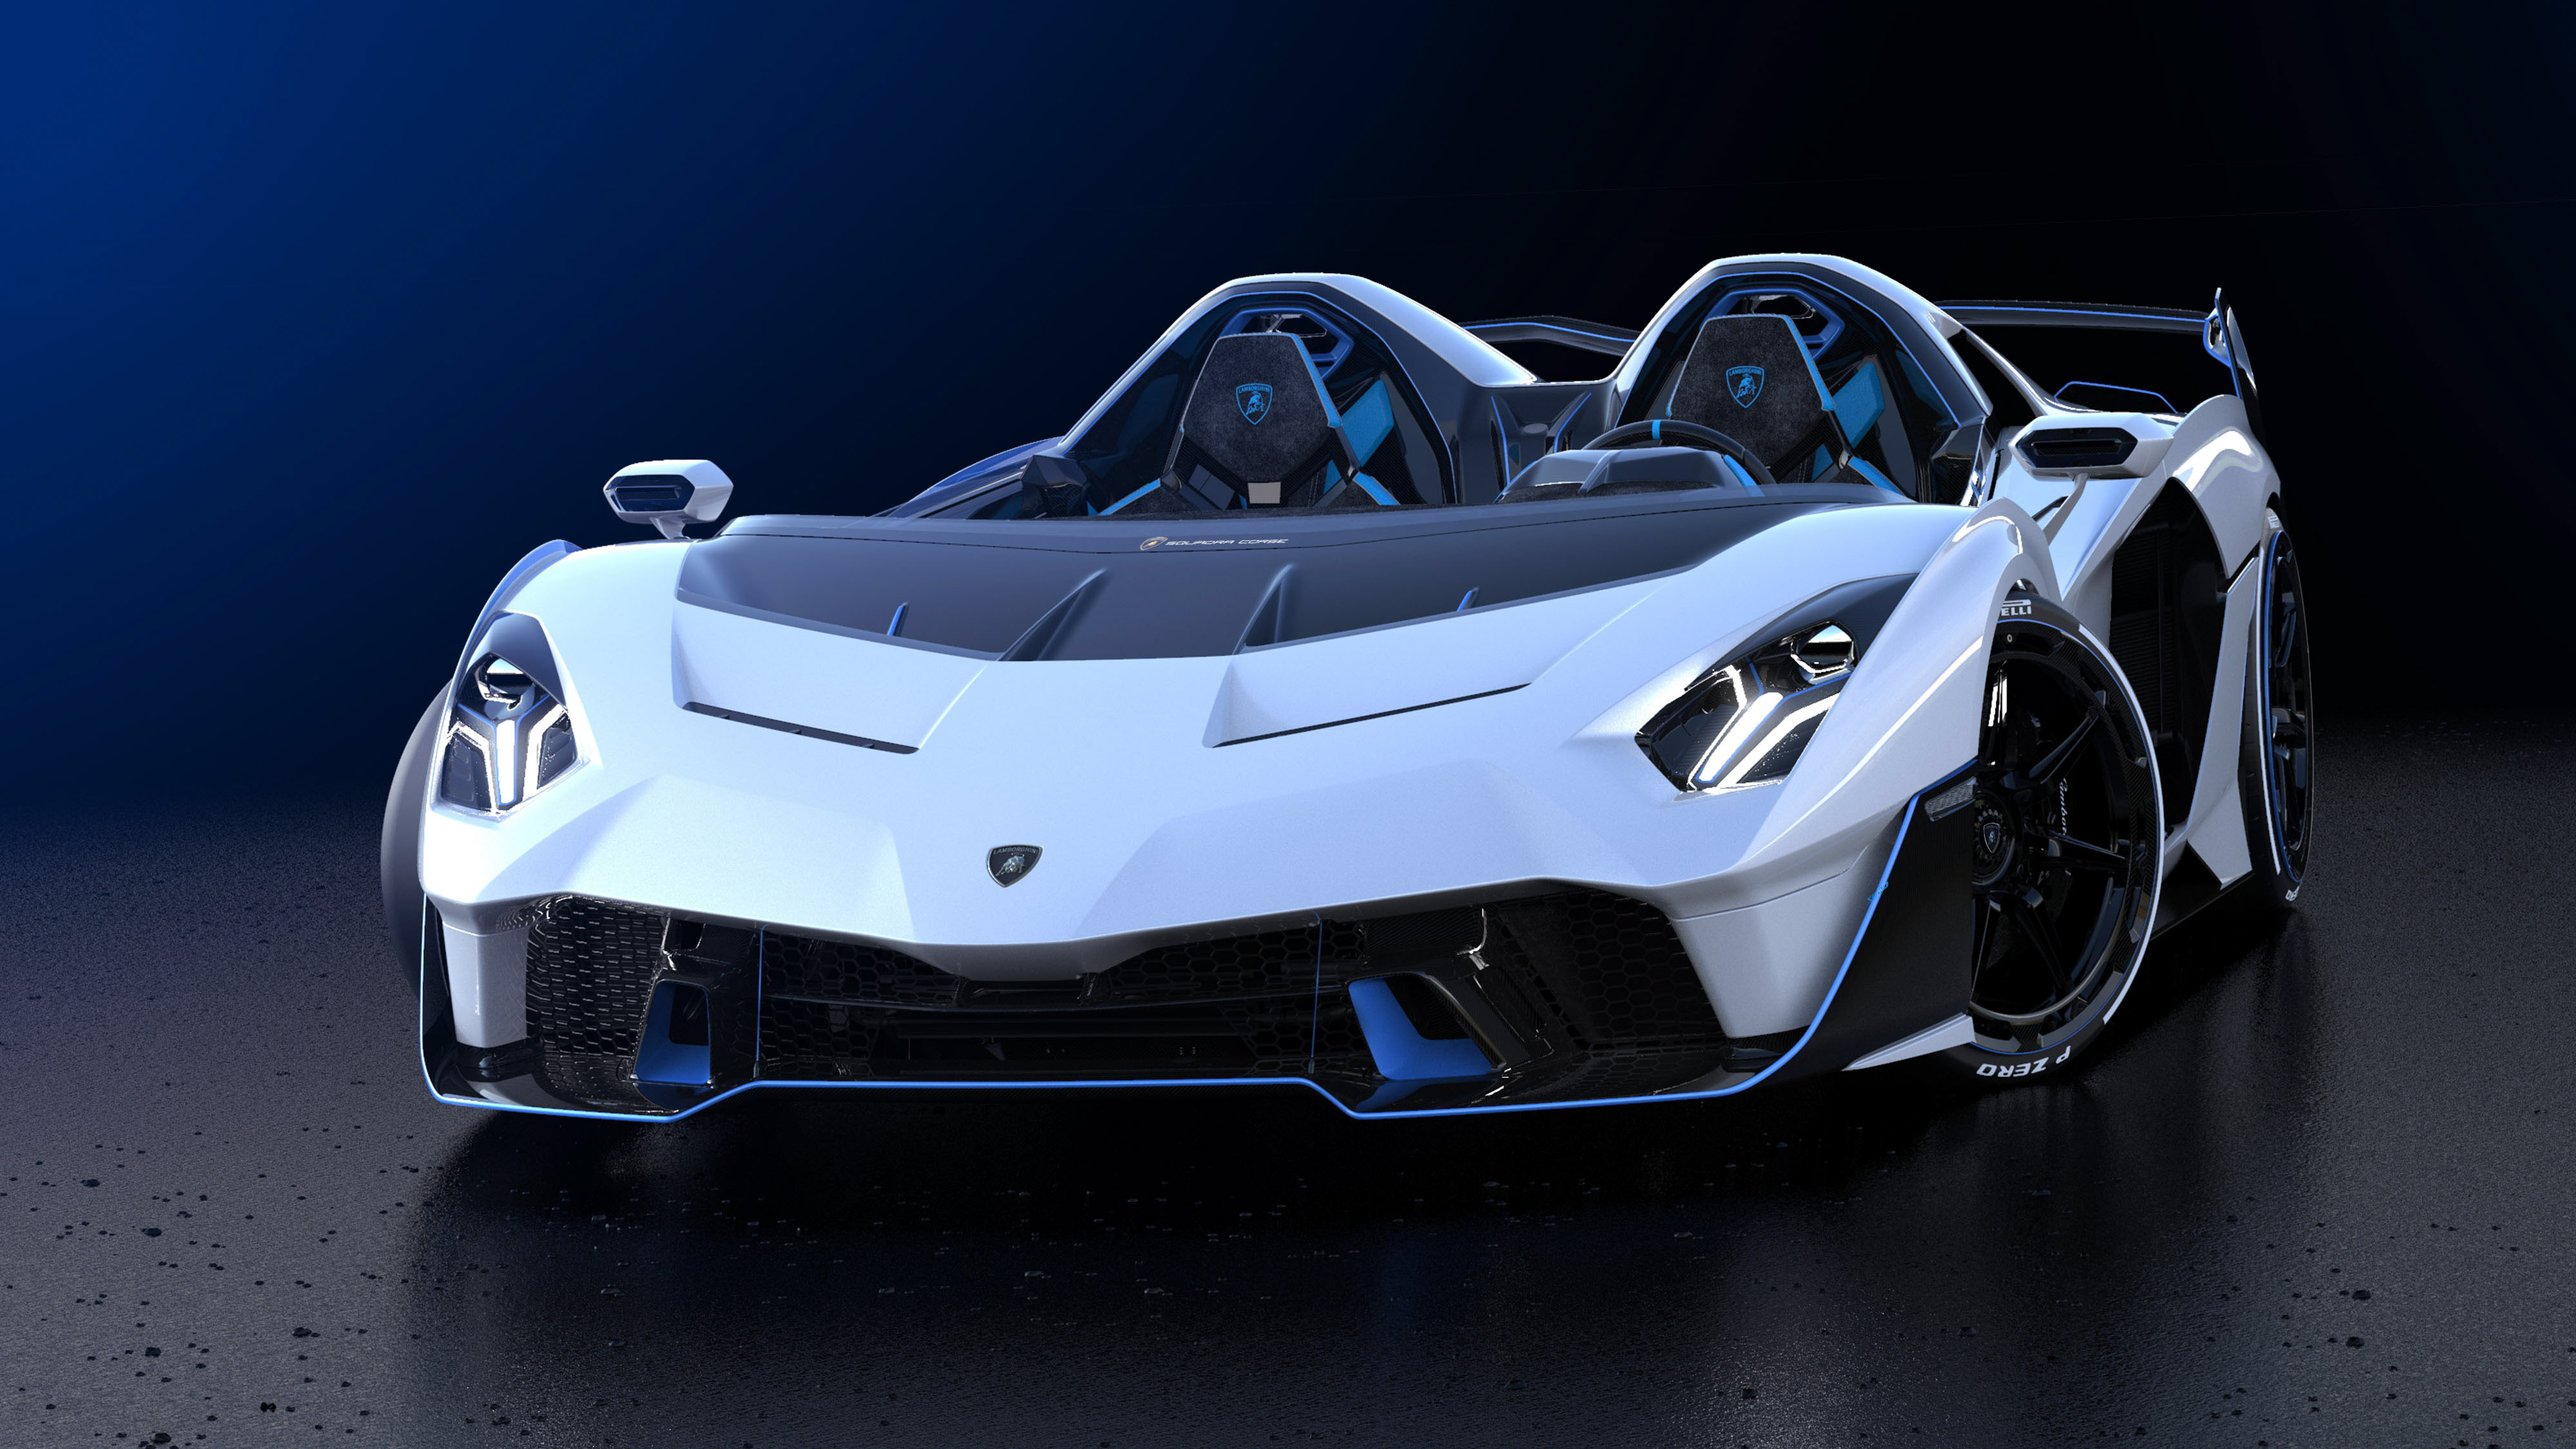 2021 Lamborghini SC20 New, HD Cars, 4k Wallpapers, Images ...